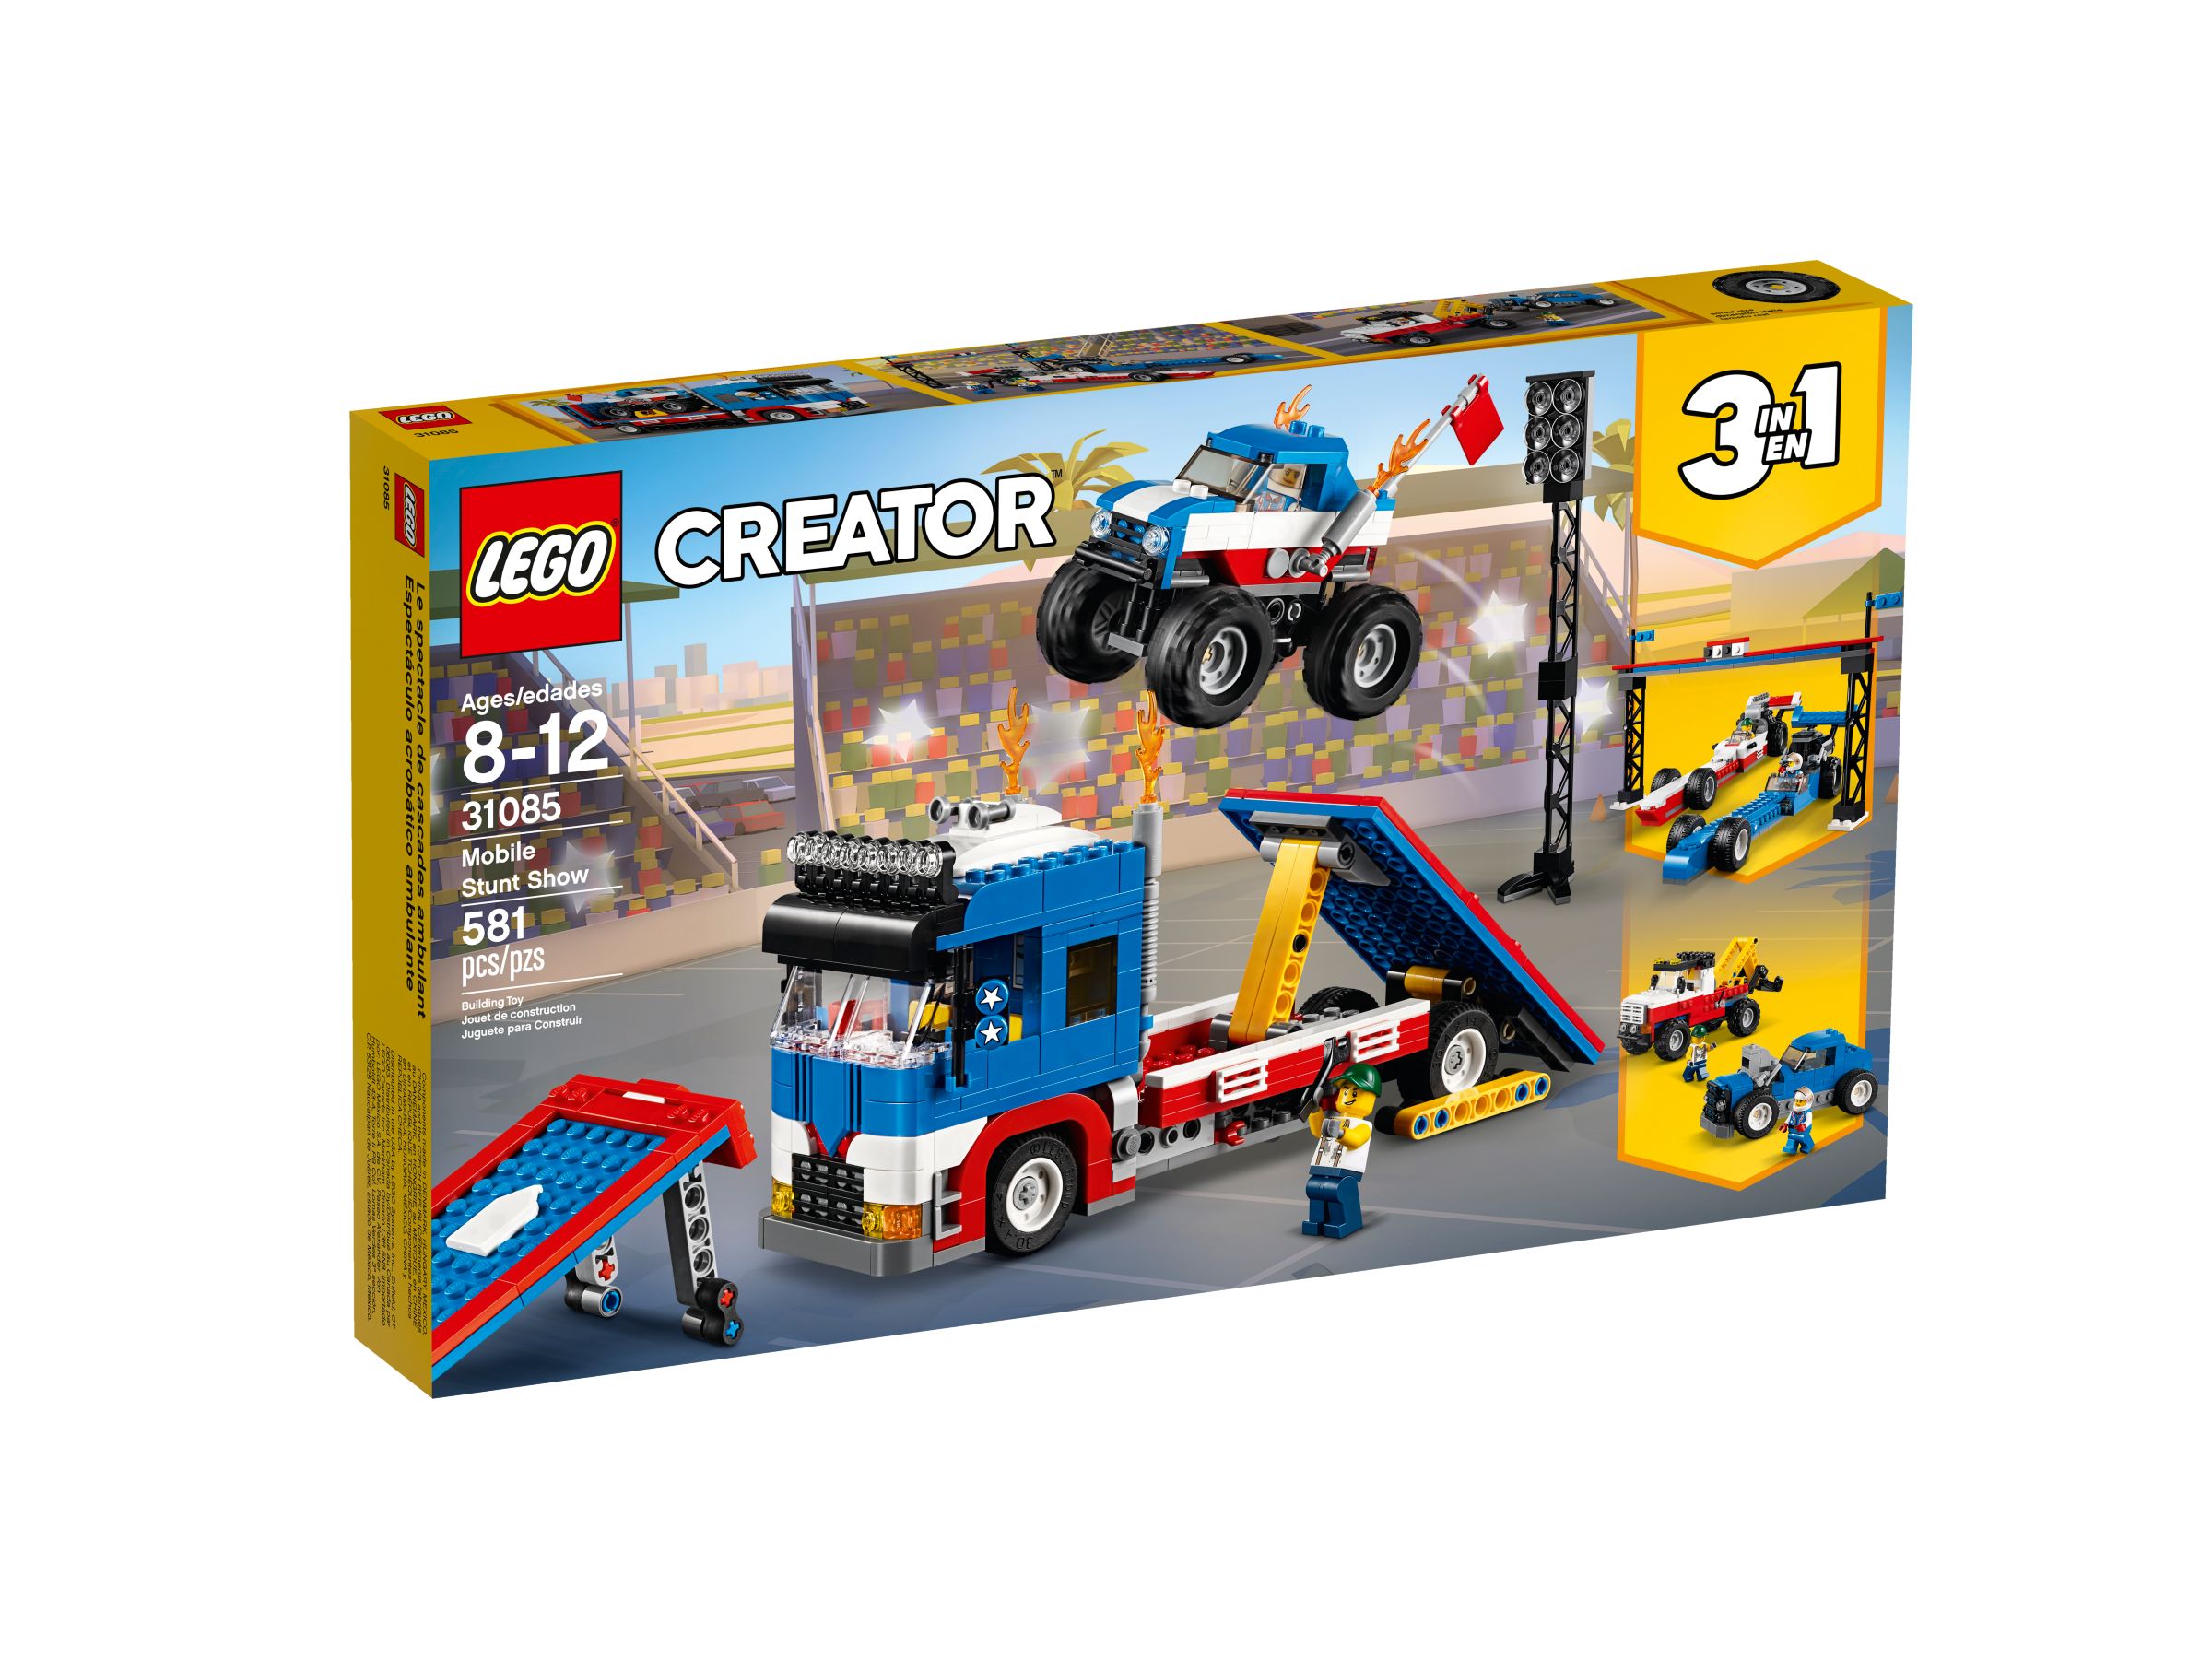 LEGO Creator 31085 Stunt-Truck-Transporter LEGO_31085_alt1.jpg